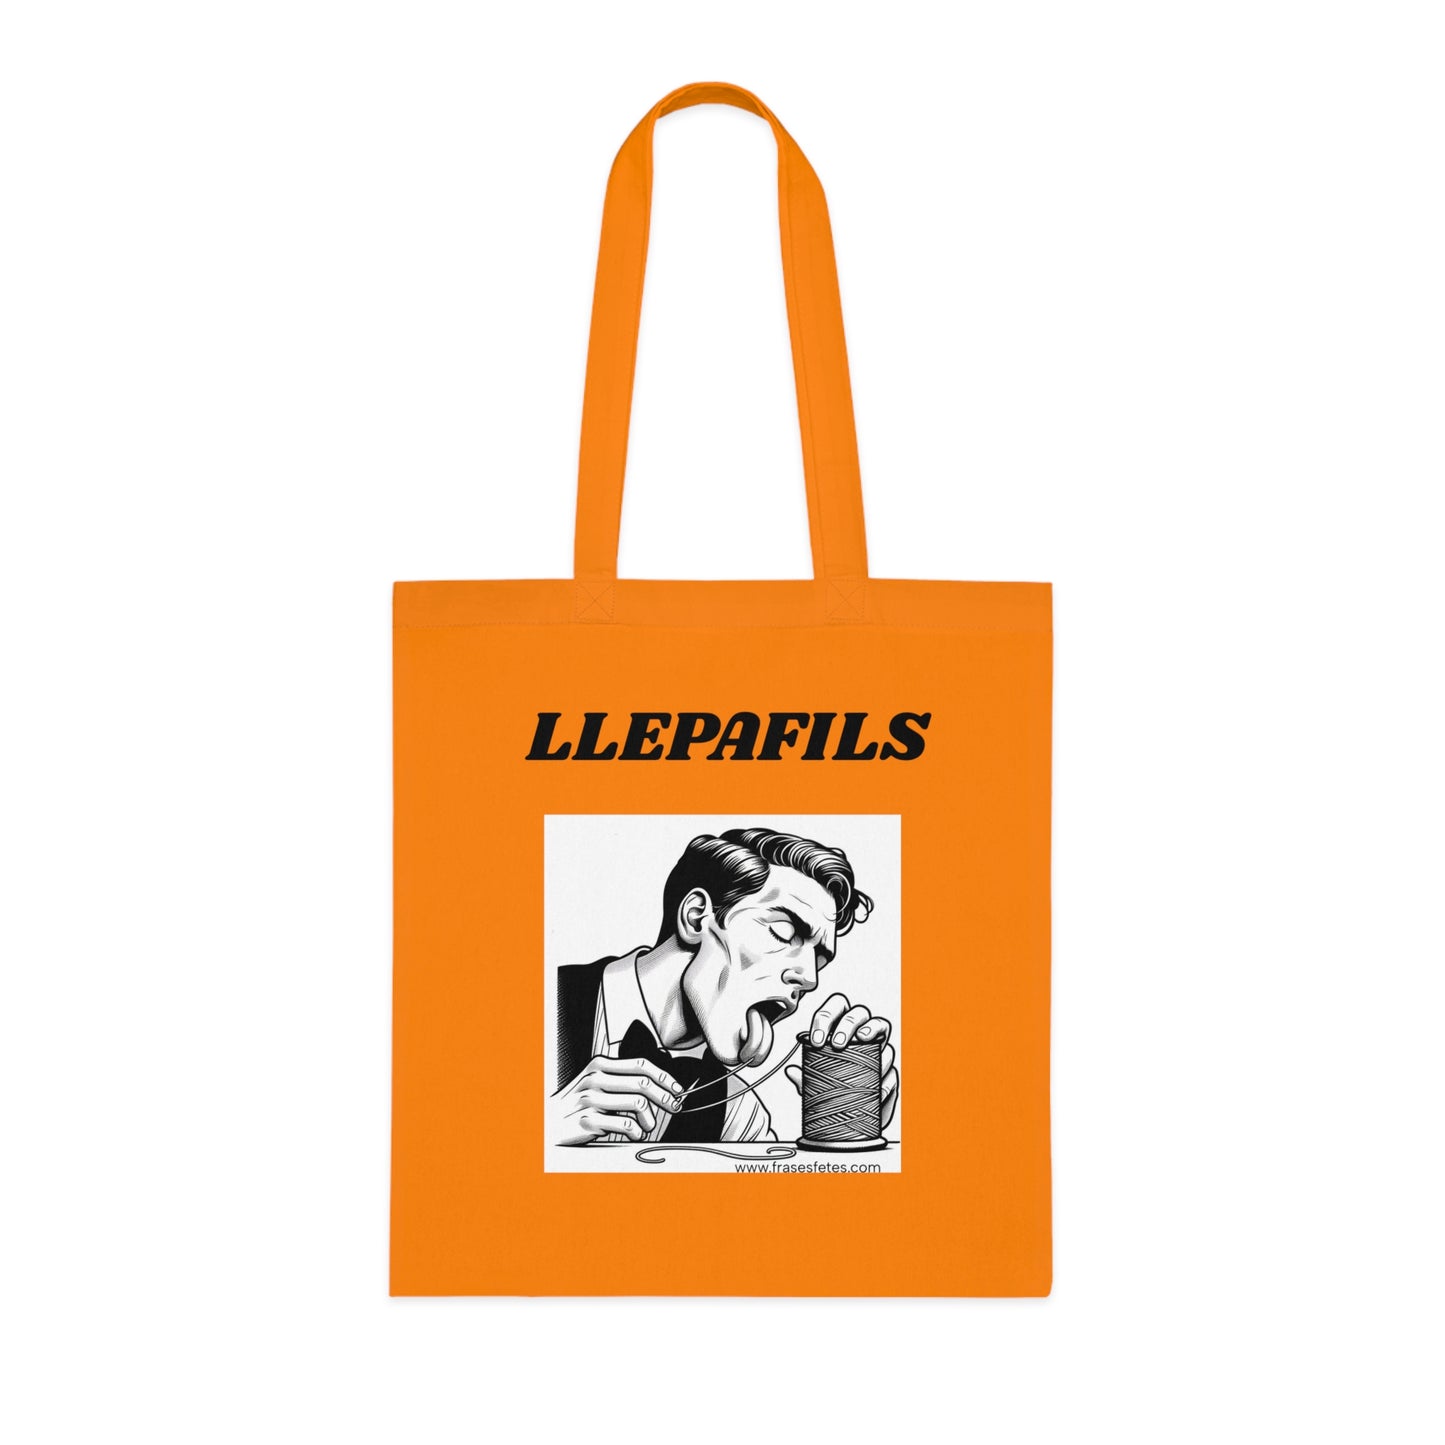 LLEPAFILS tote bag